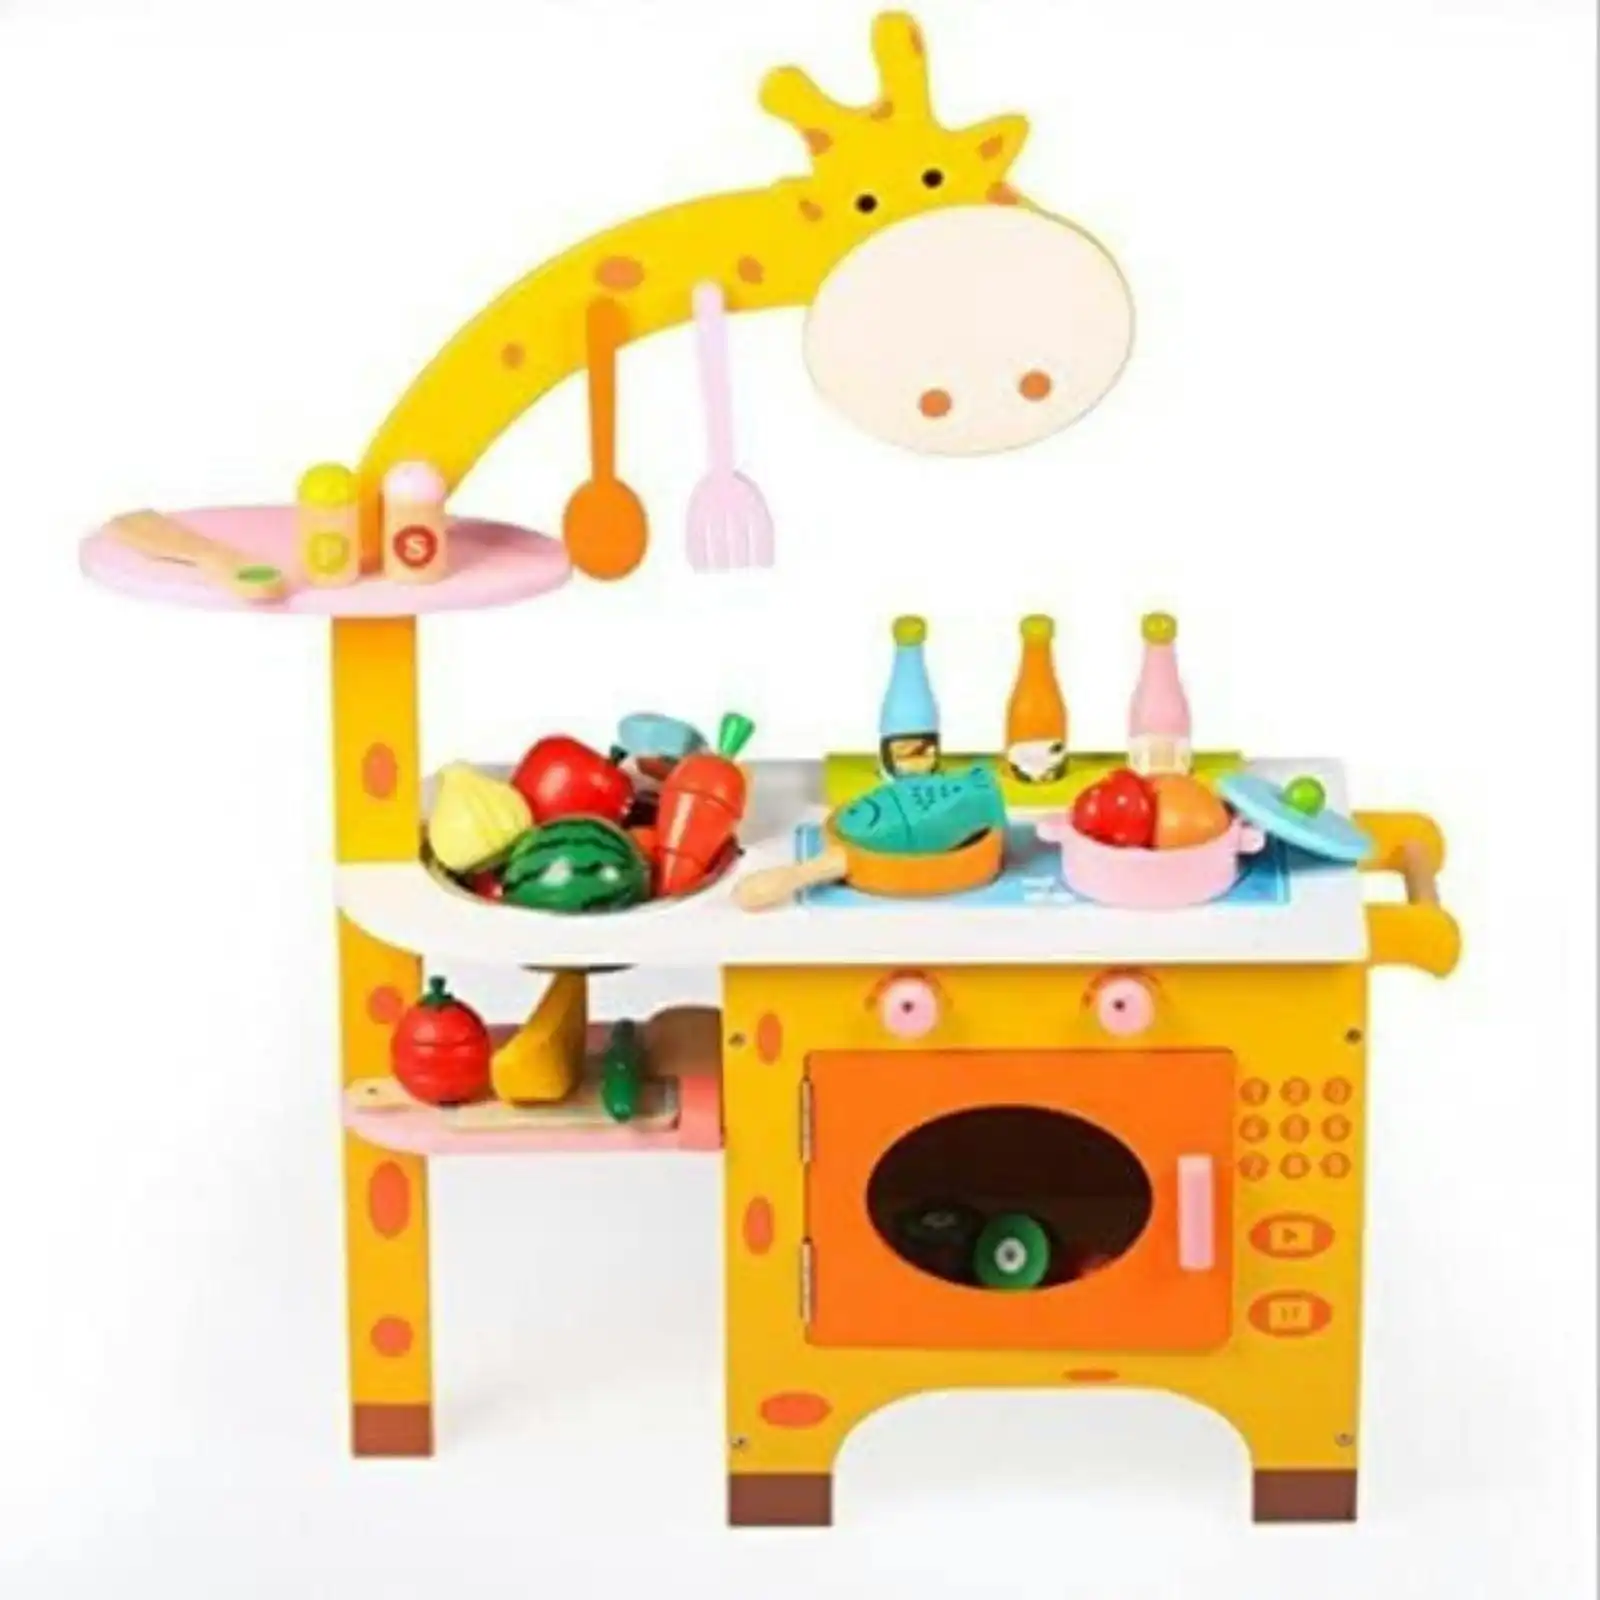 Ekkio High-quality Mdf Board Environmentally Friendly Material Wooden Kitchen Playset For Kids (Giraffe Shape Kitchen Set)